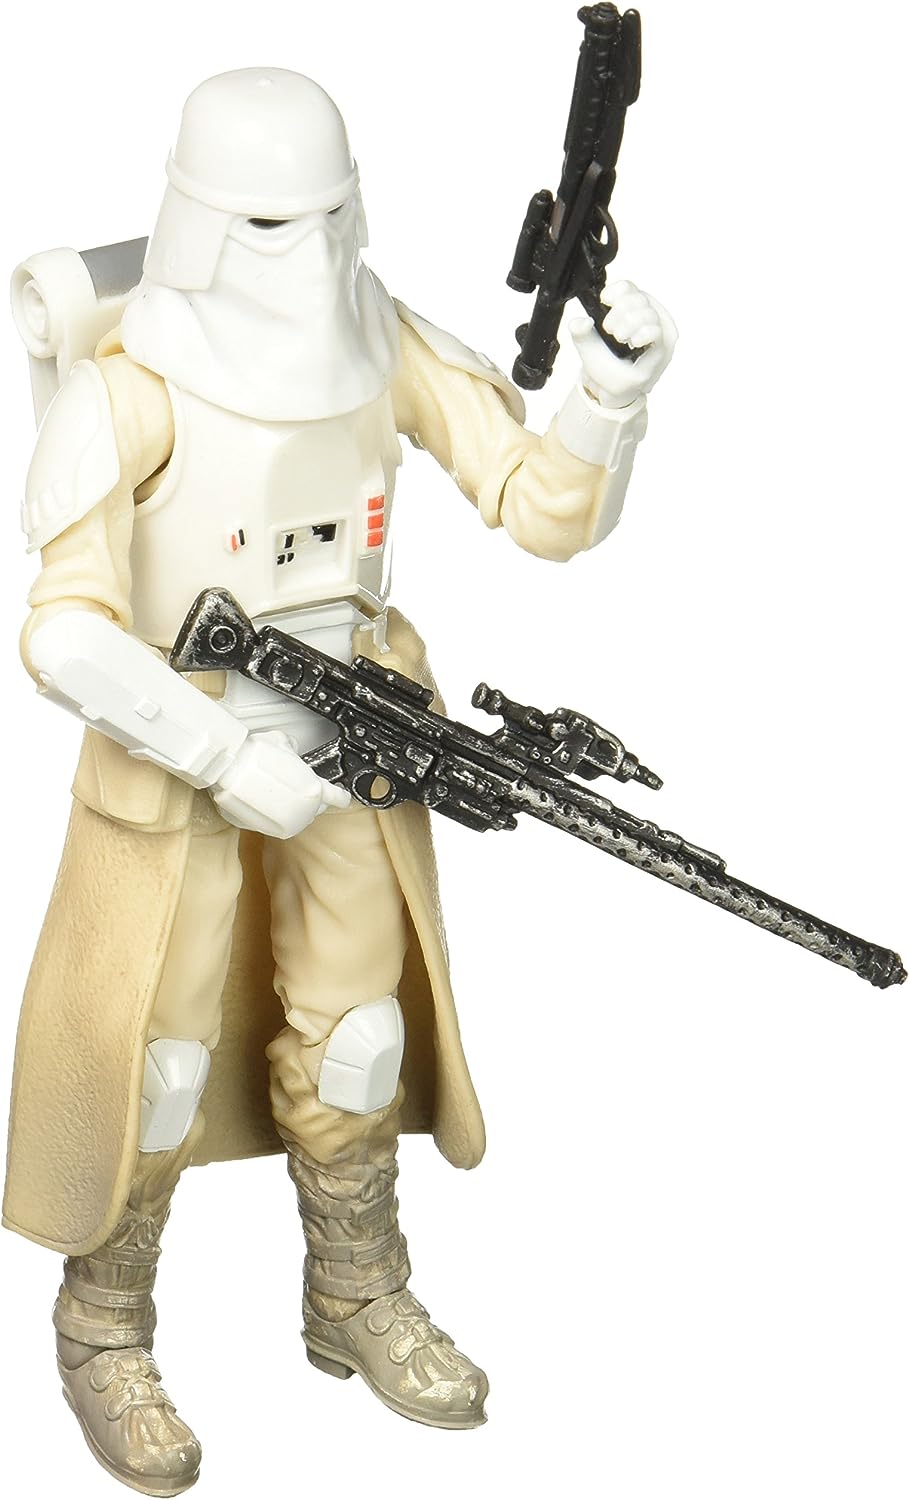 Star Wars Black Series 6 inch Snowtrooper